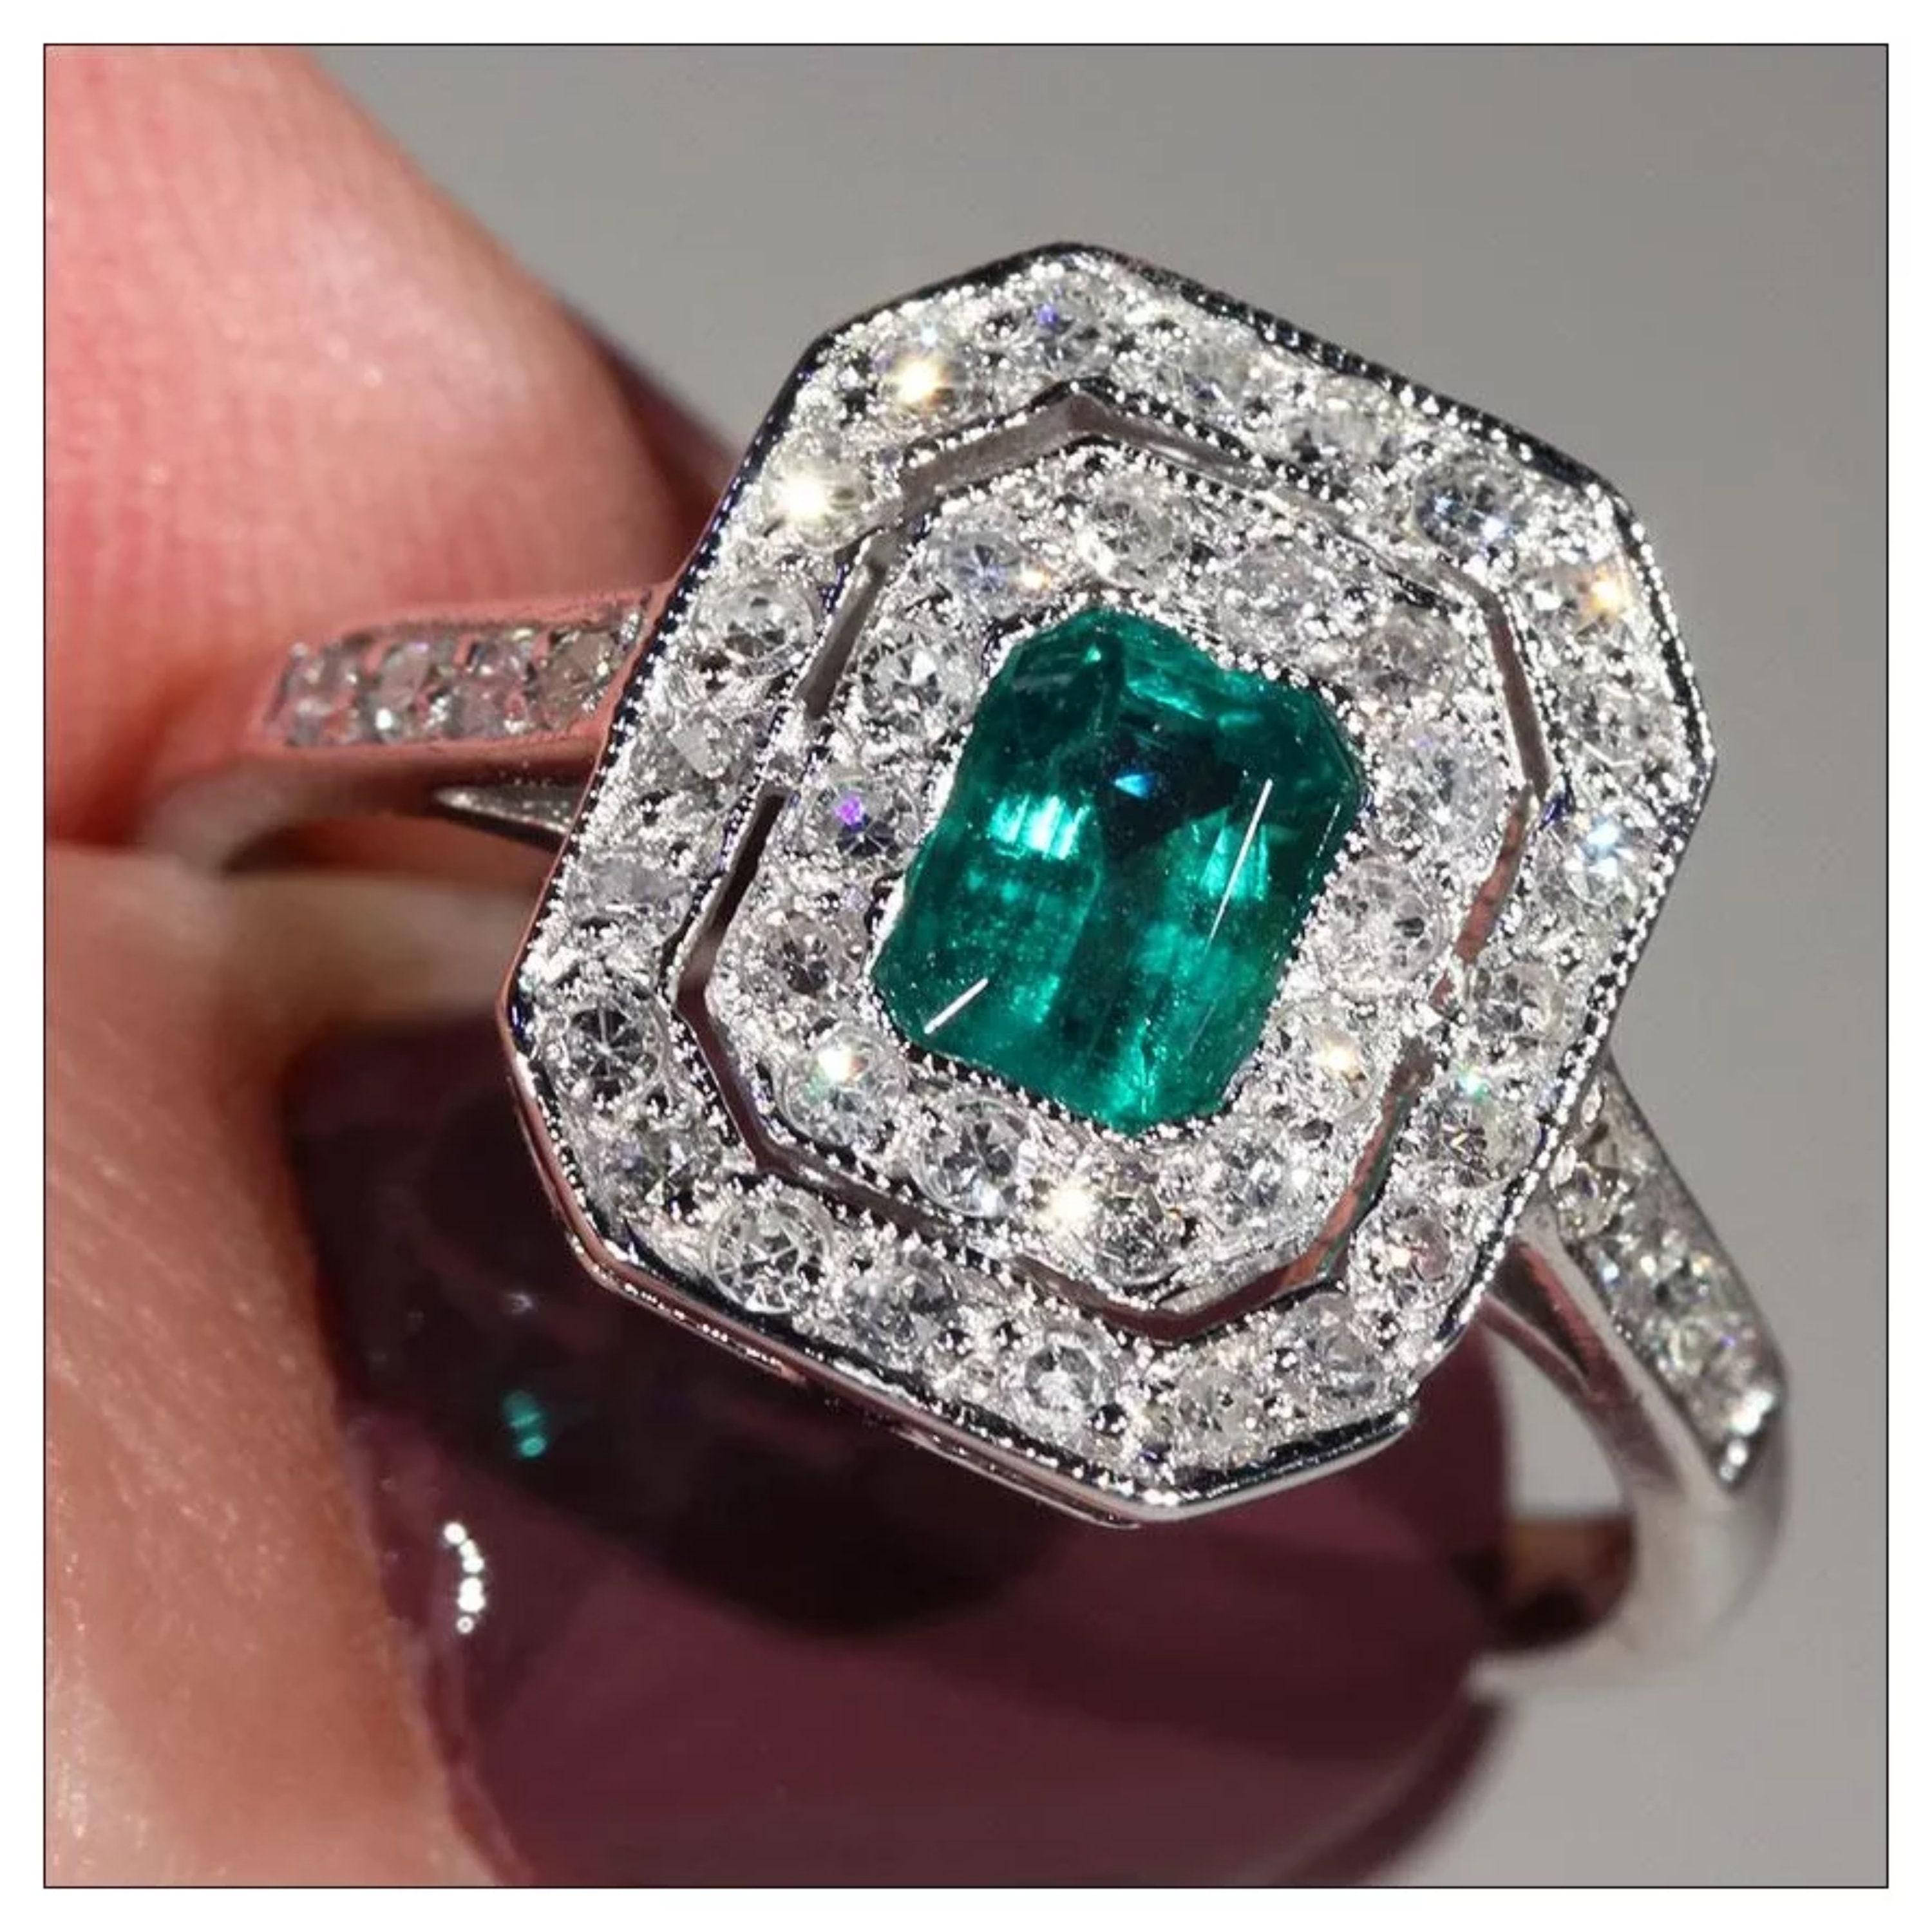 For Sale:  2 Carat Emerald Cut Emerald Diamond Engagement Ring, Halo Emerald Diamond Ring 4